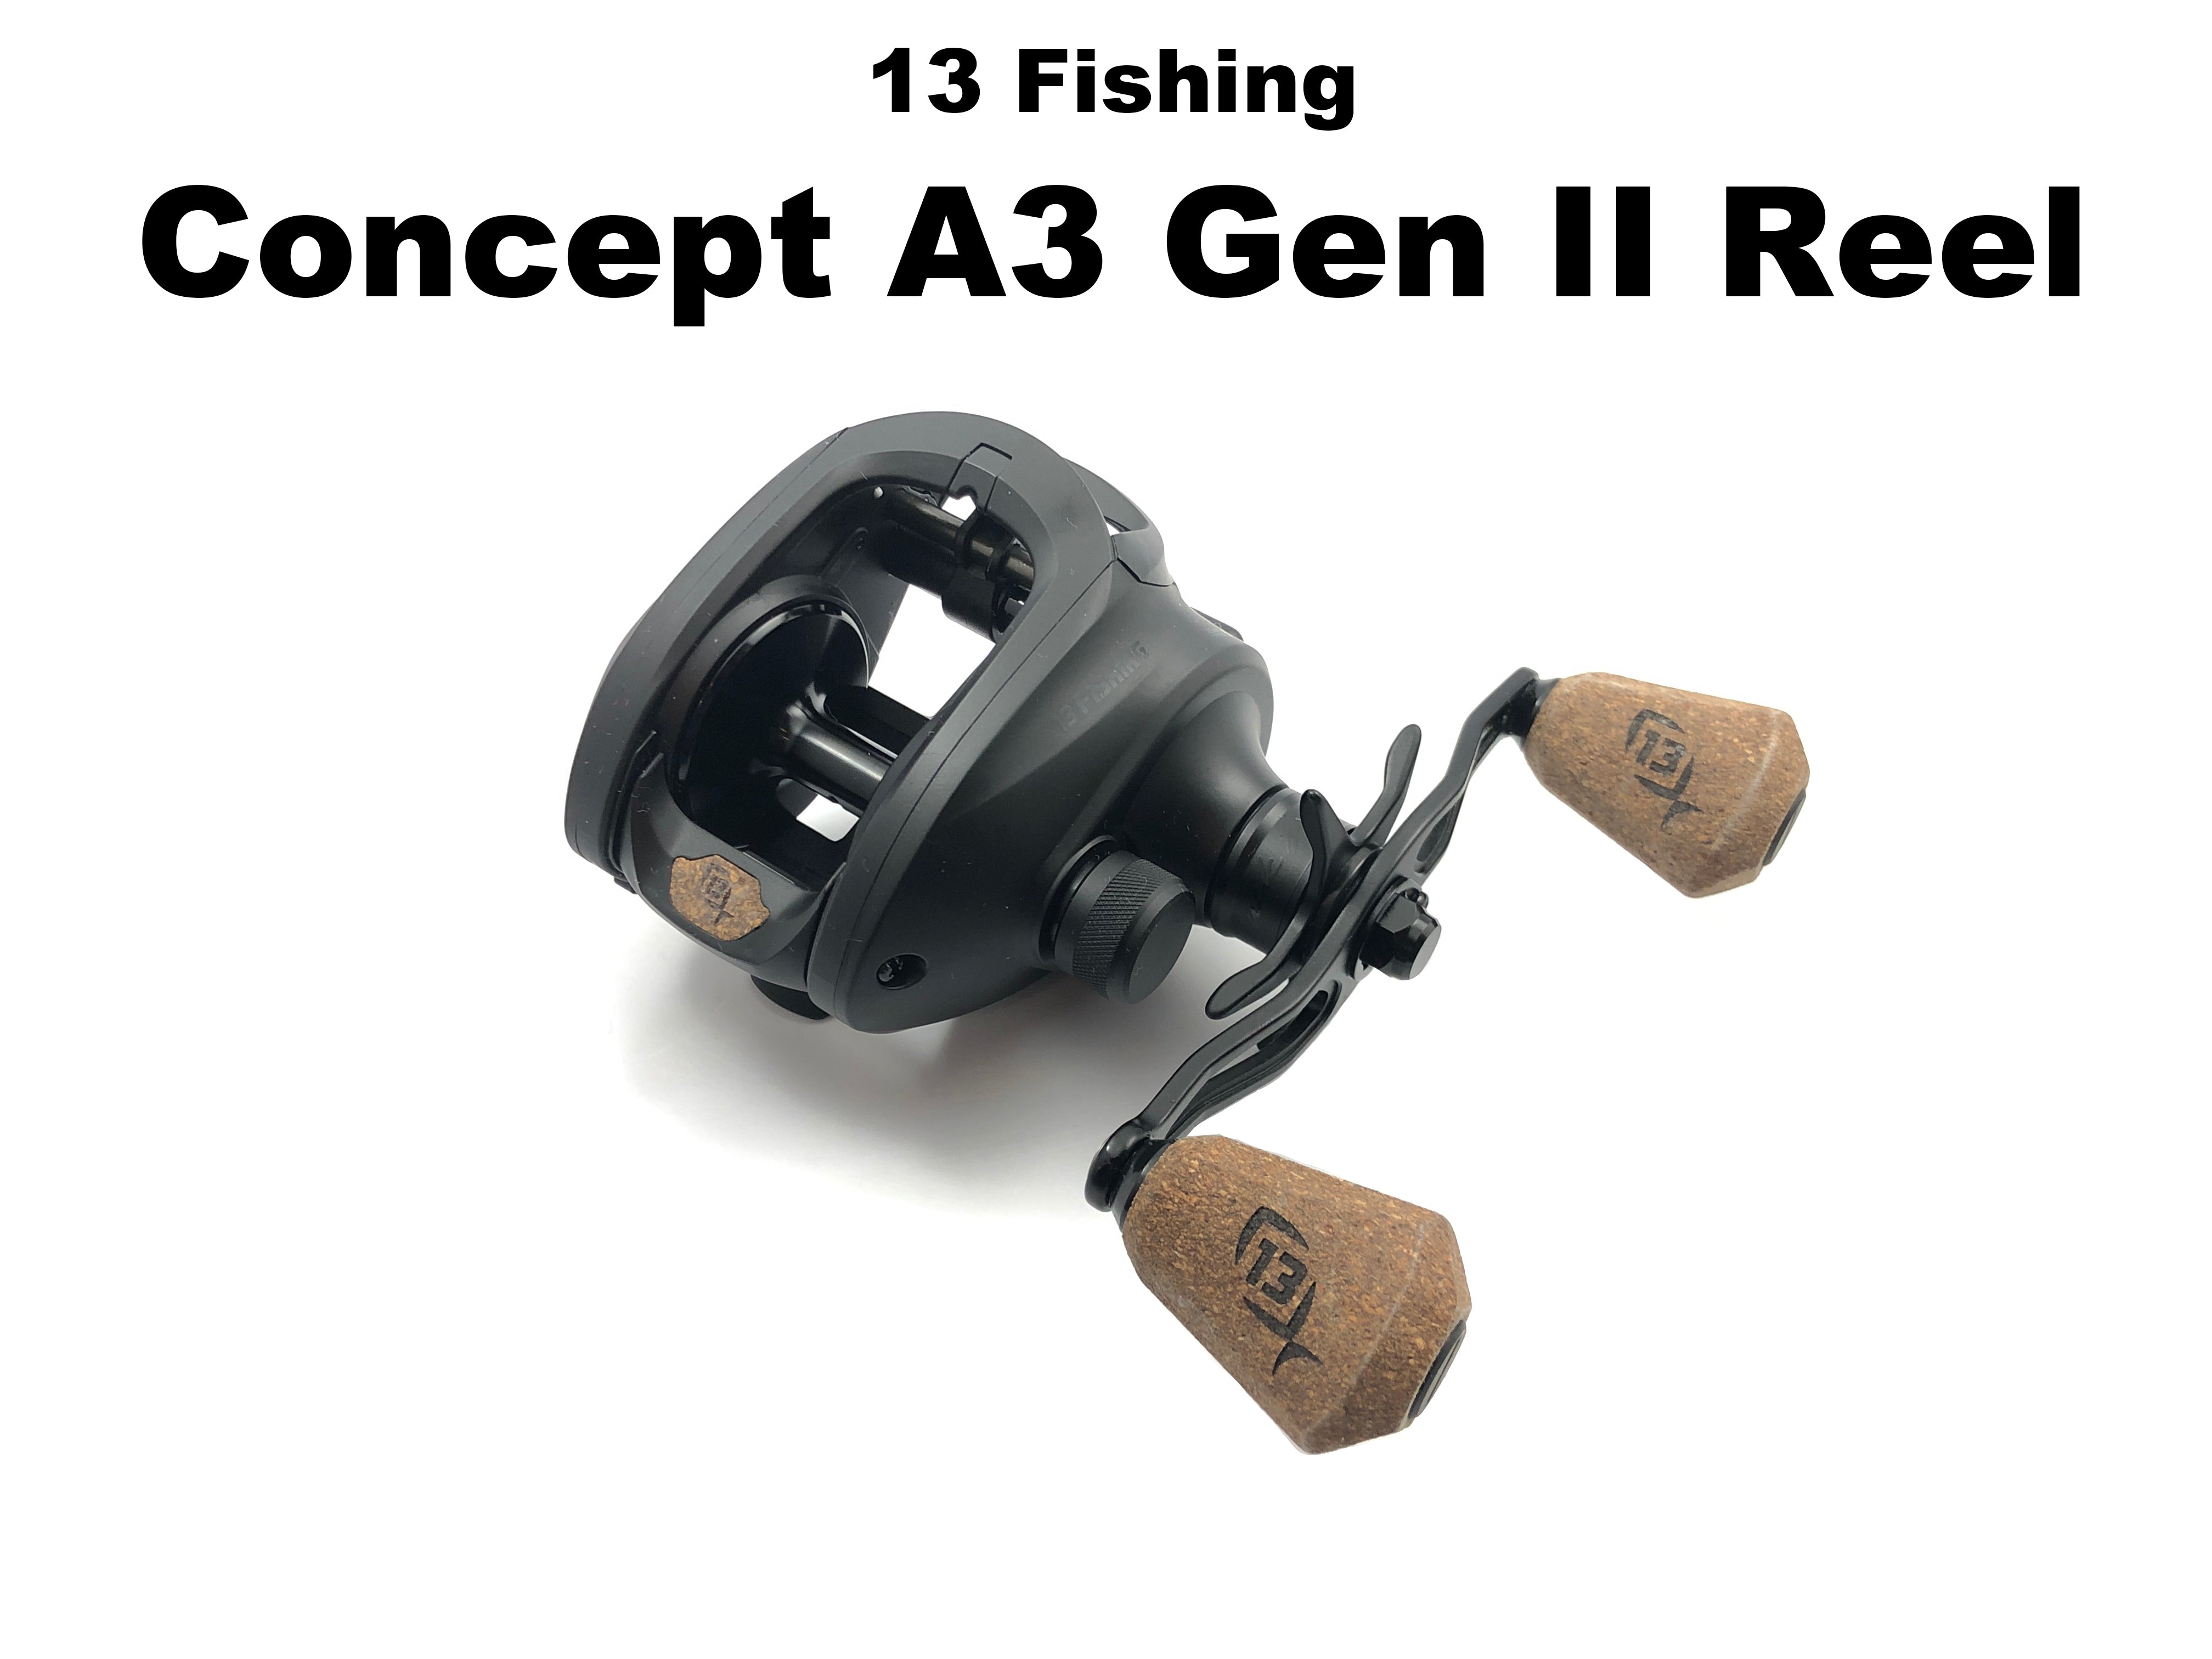 13 FISHING - Concept A3 - Baitcast Reels